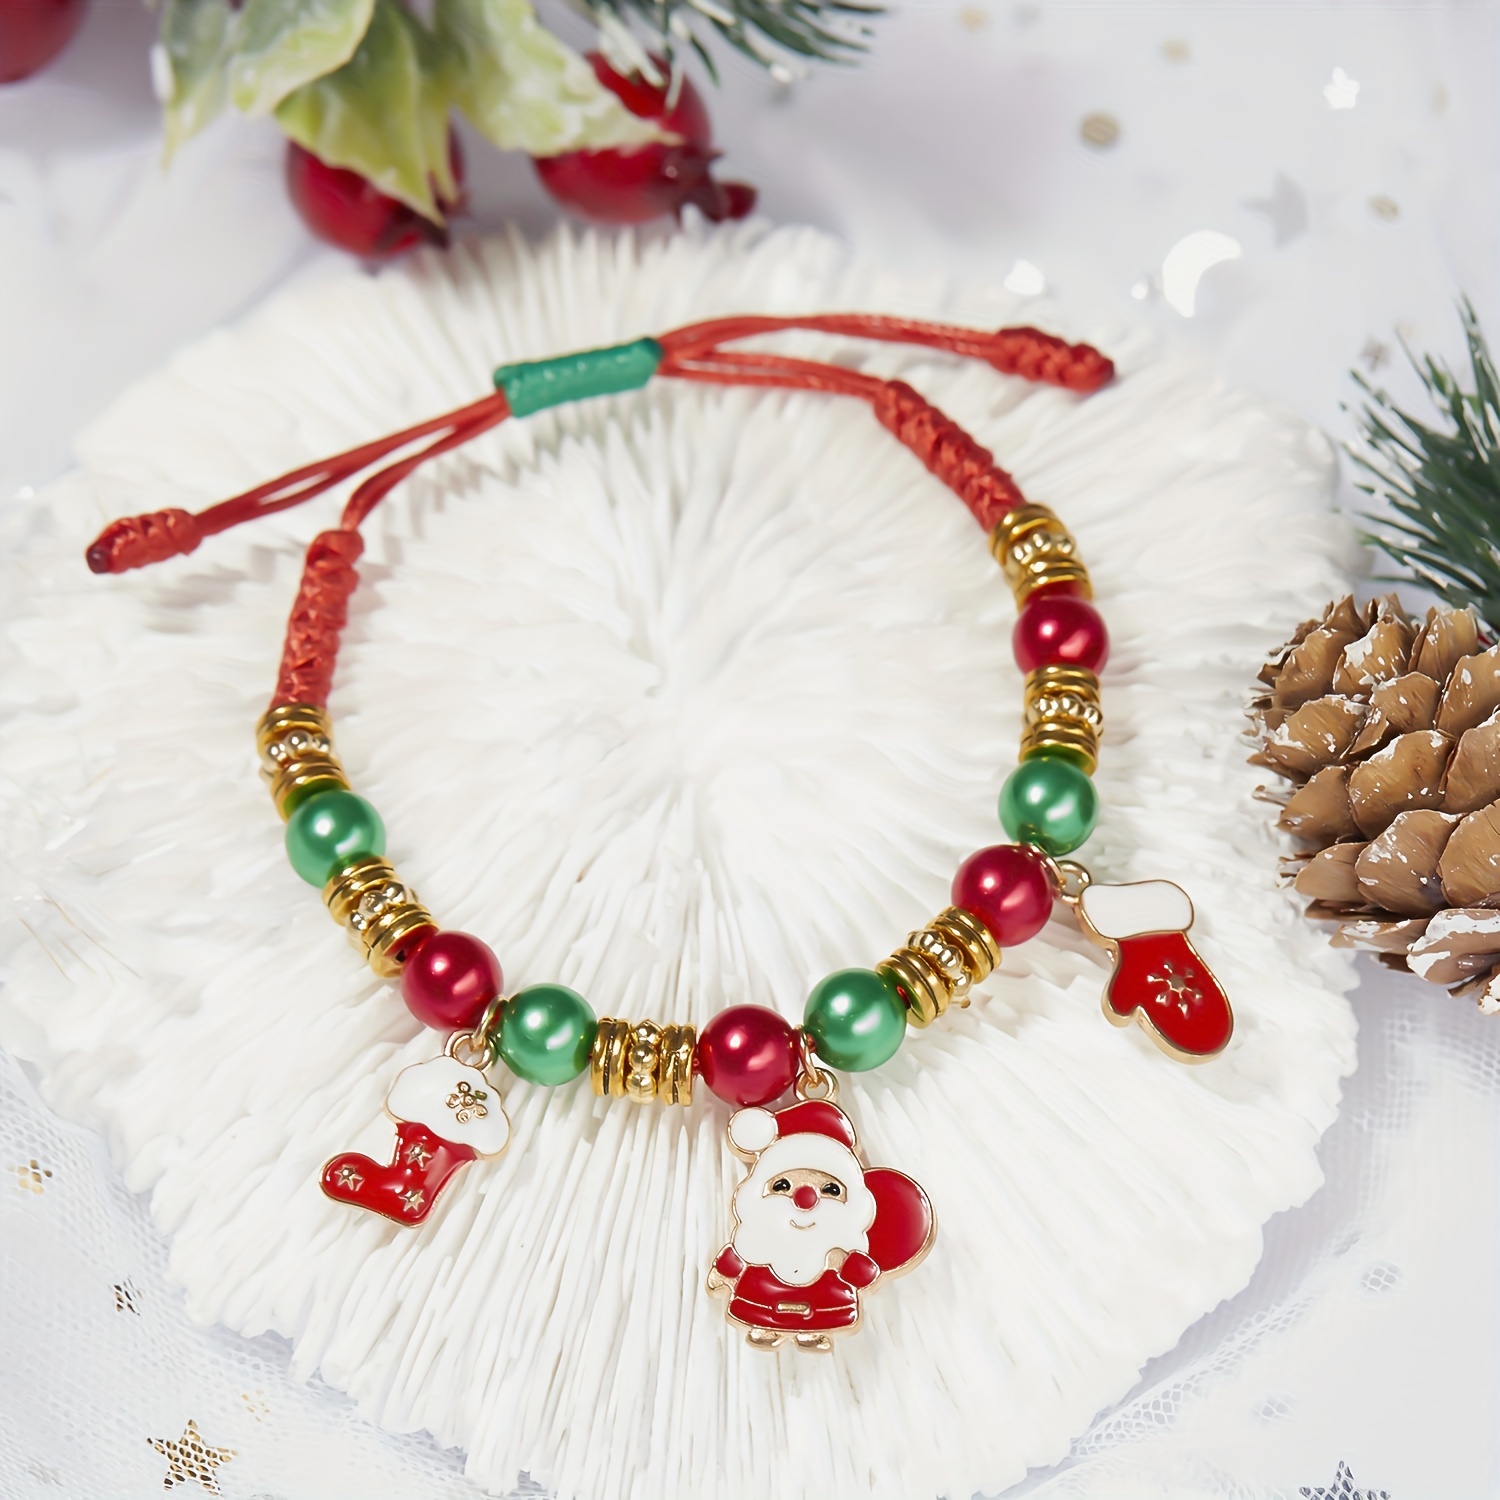 Rsaveld Charm Bracelet Making Kit,Jewelry Making Kit,DIY Bracelet Making Kit,Christmas Ideal Crafts Toys for Girls,Snowman Santa Claus Bracelet Charms